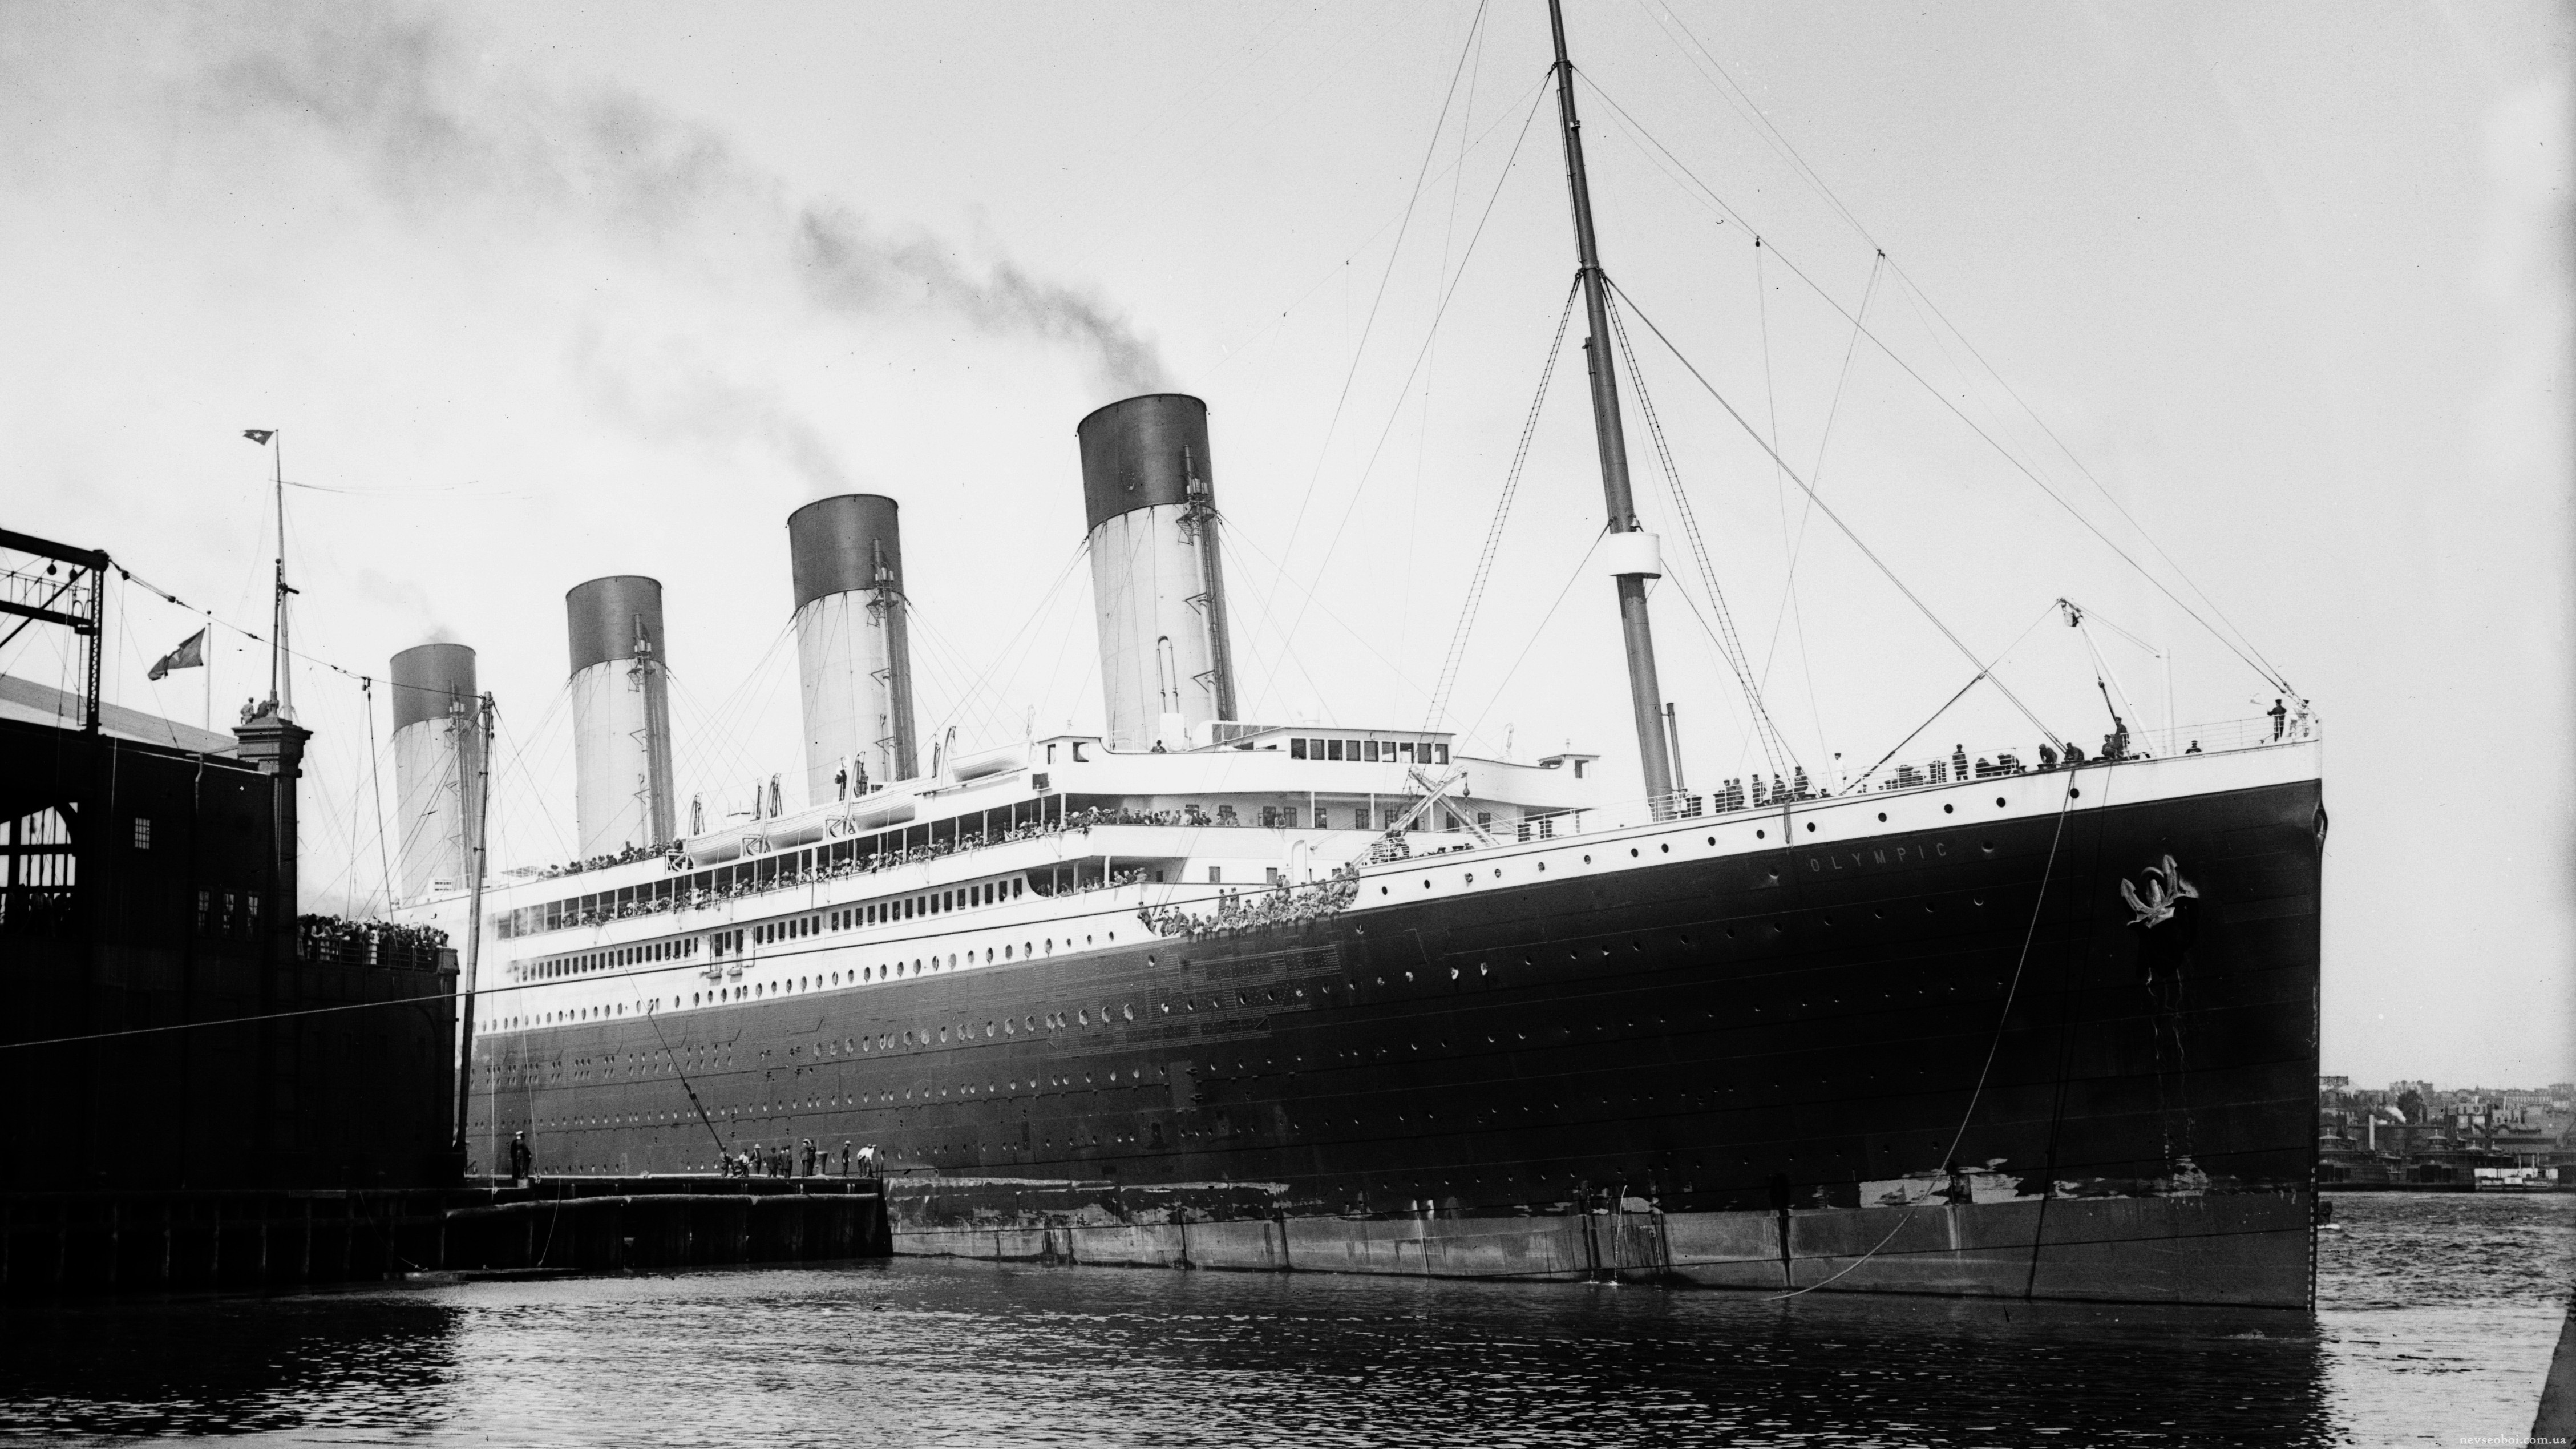 Мир олимпик. Титаник 2 пароход. Титаник корабль. Пассажирский корабль Титаник. Лайнер "Титаник".